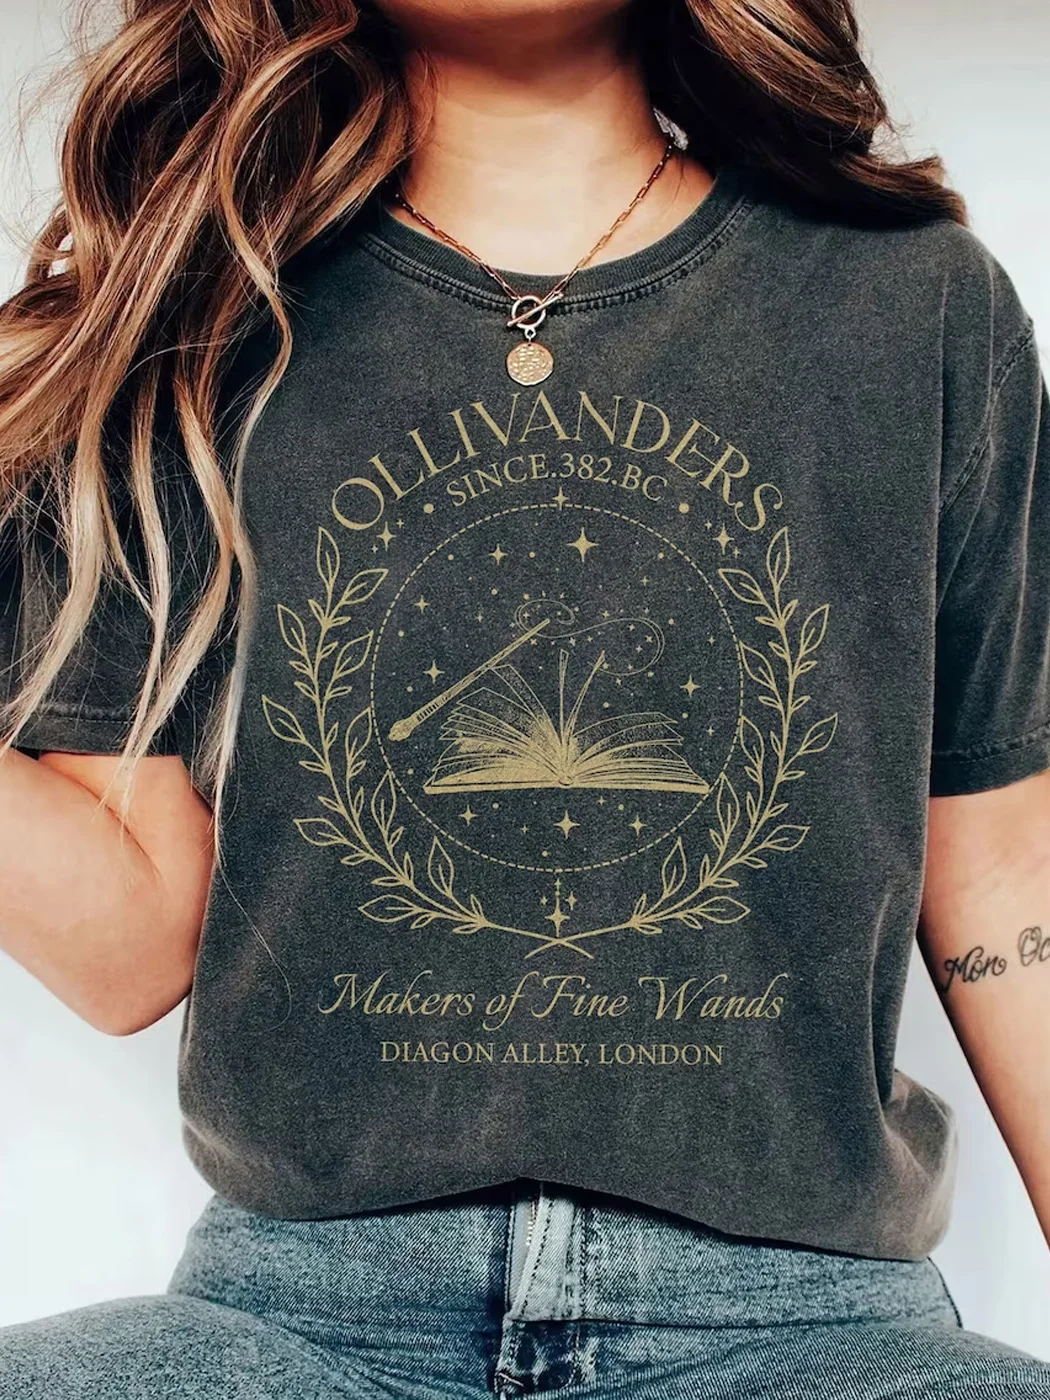 Ollivanders Wand Shop Tshirt / DarkAcademias /Darkacademias